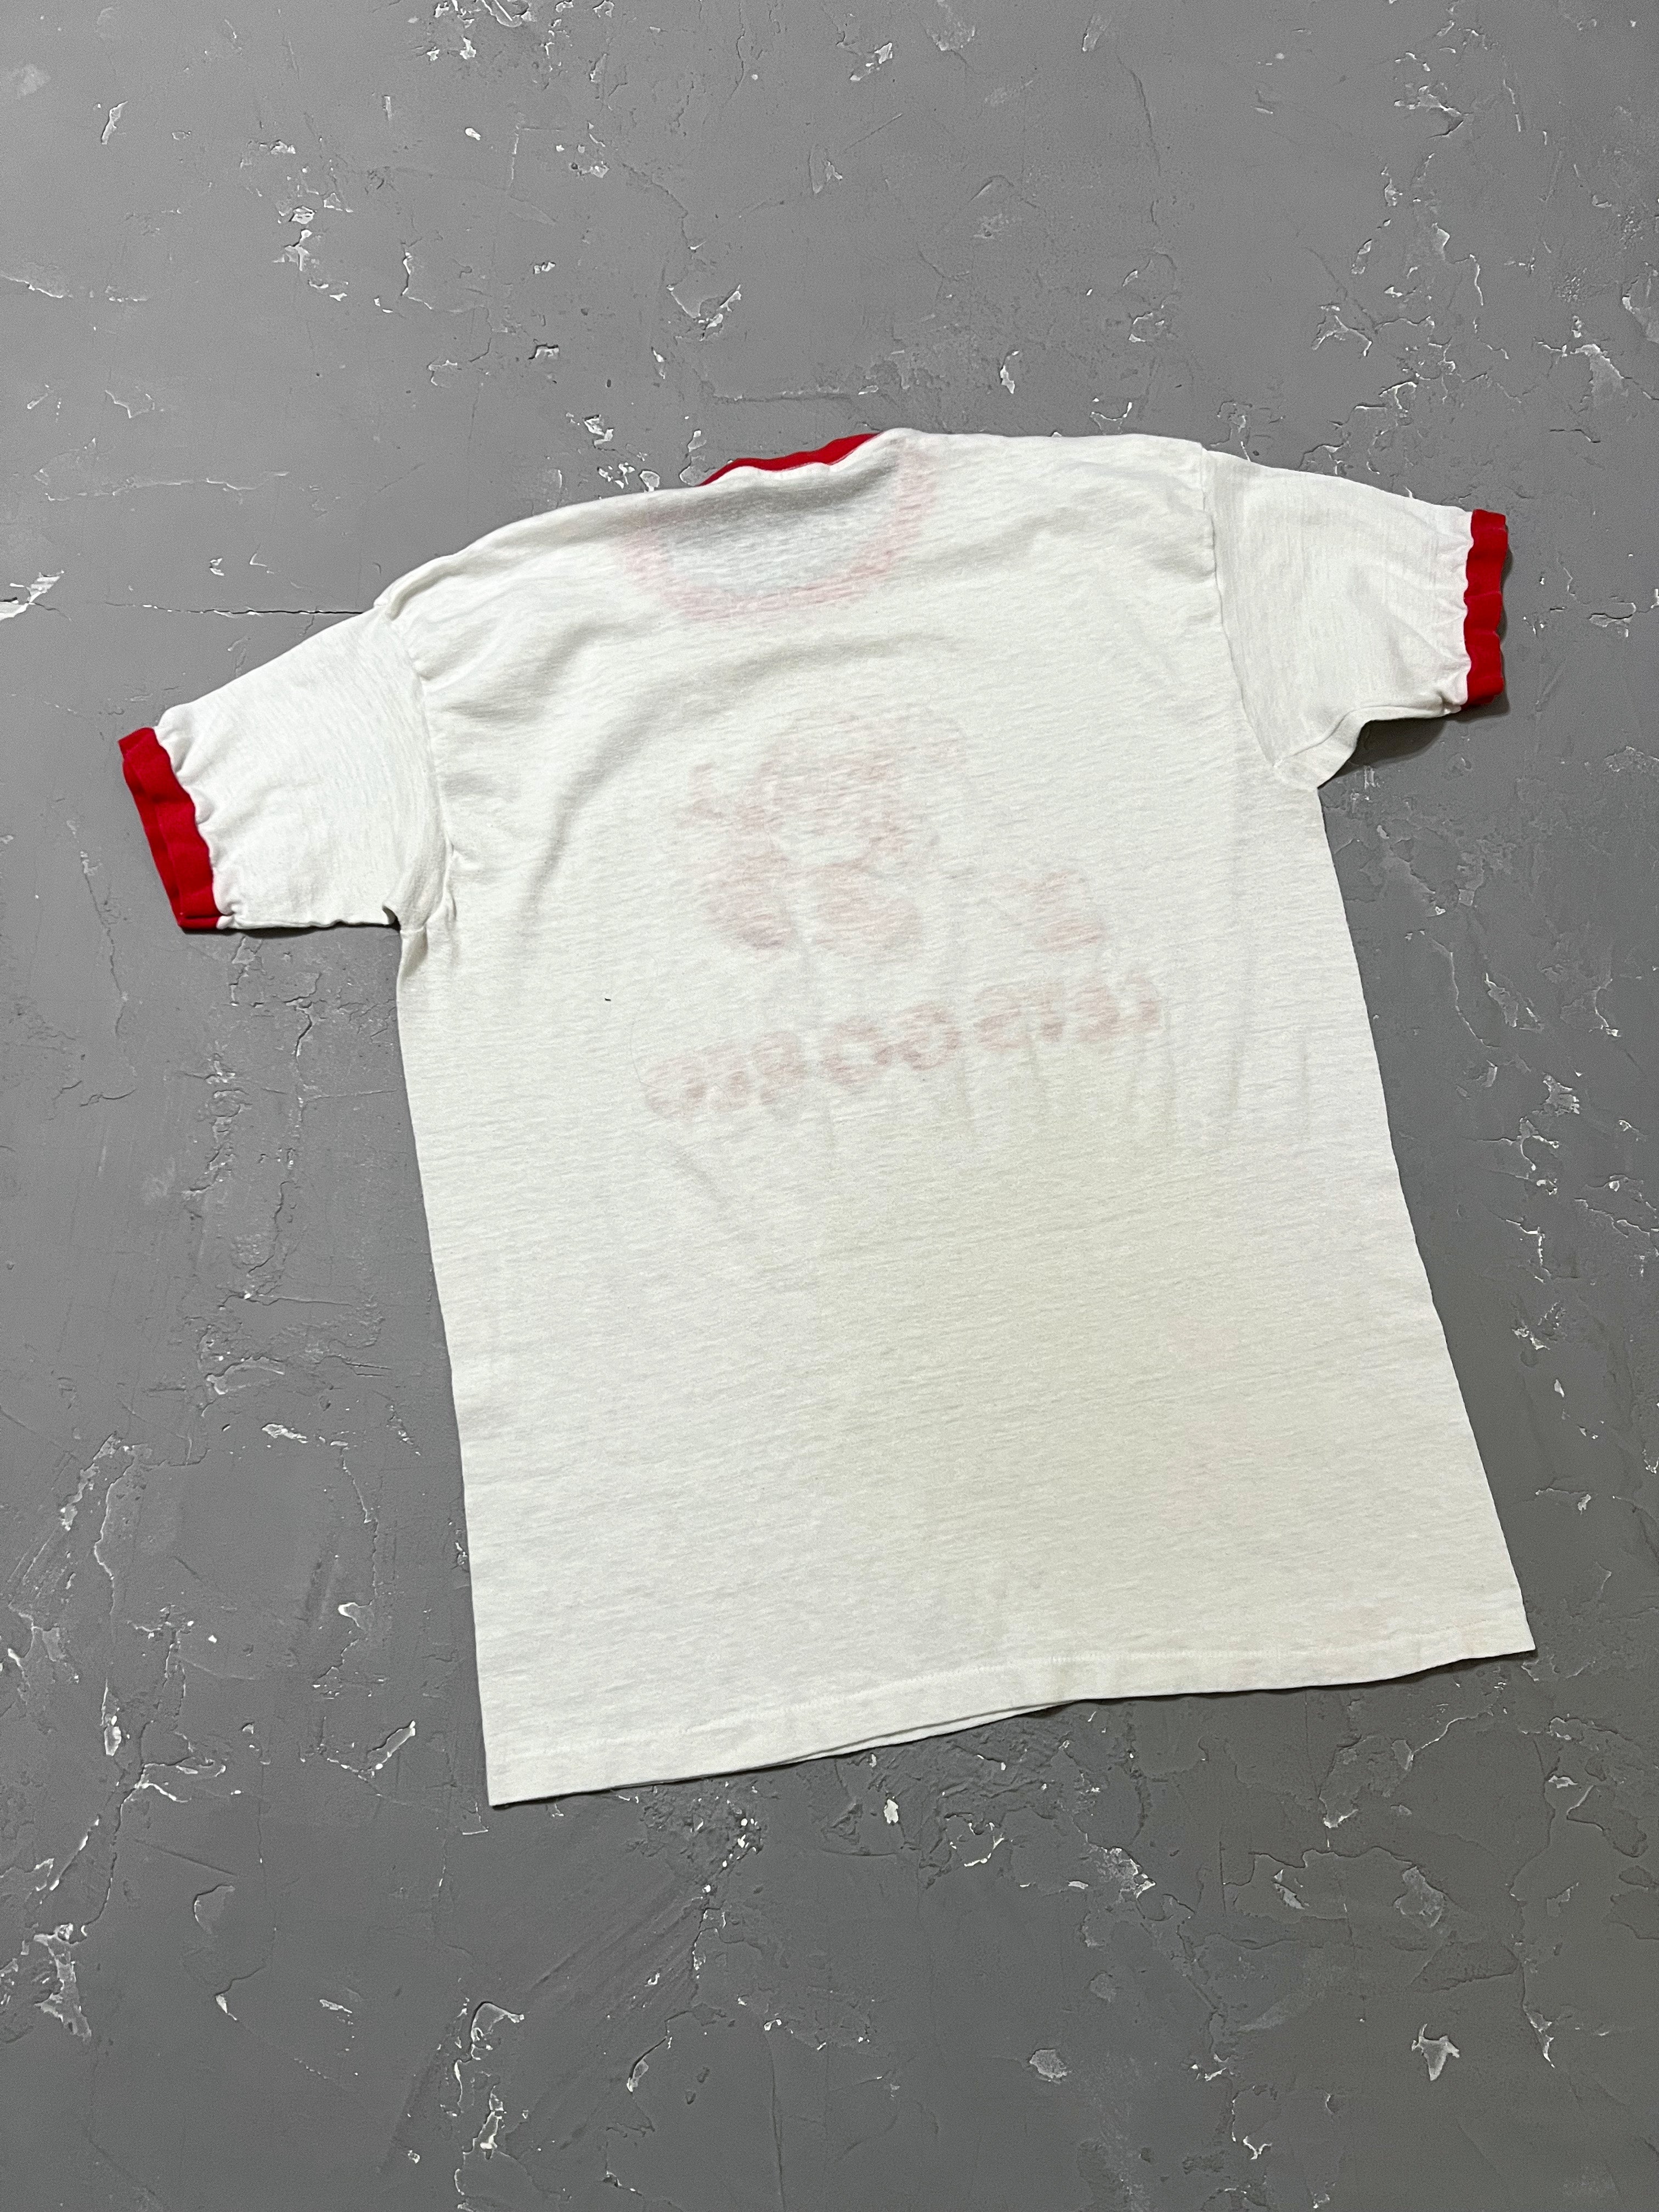 1980s RPI “Let’s Go Red” Ringer Shirt [M]